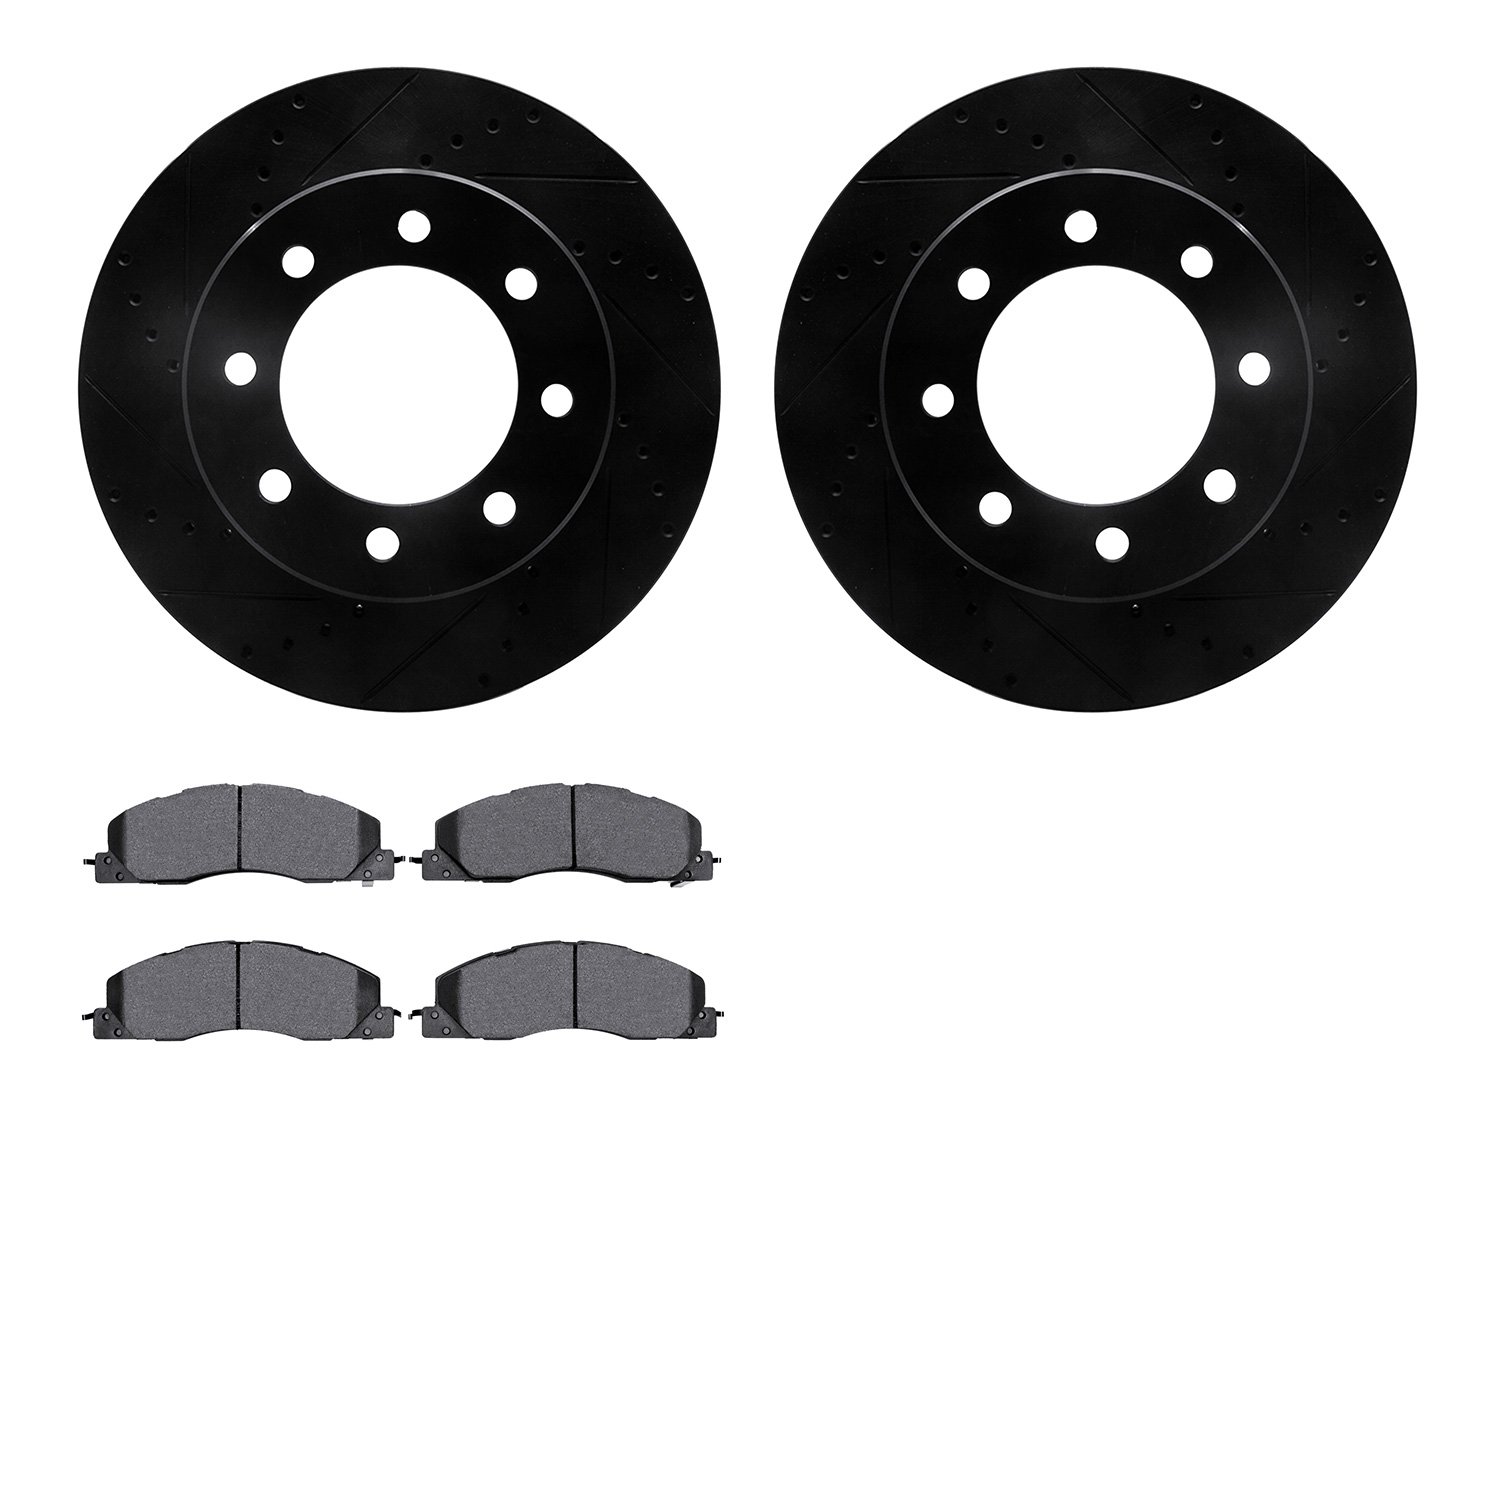 8402-40022 Drilled/Slotted Brake Rotors with Ultimate-Duty Brake Pads Kit [Black], 2009-2018 Mopar, Position: Front